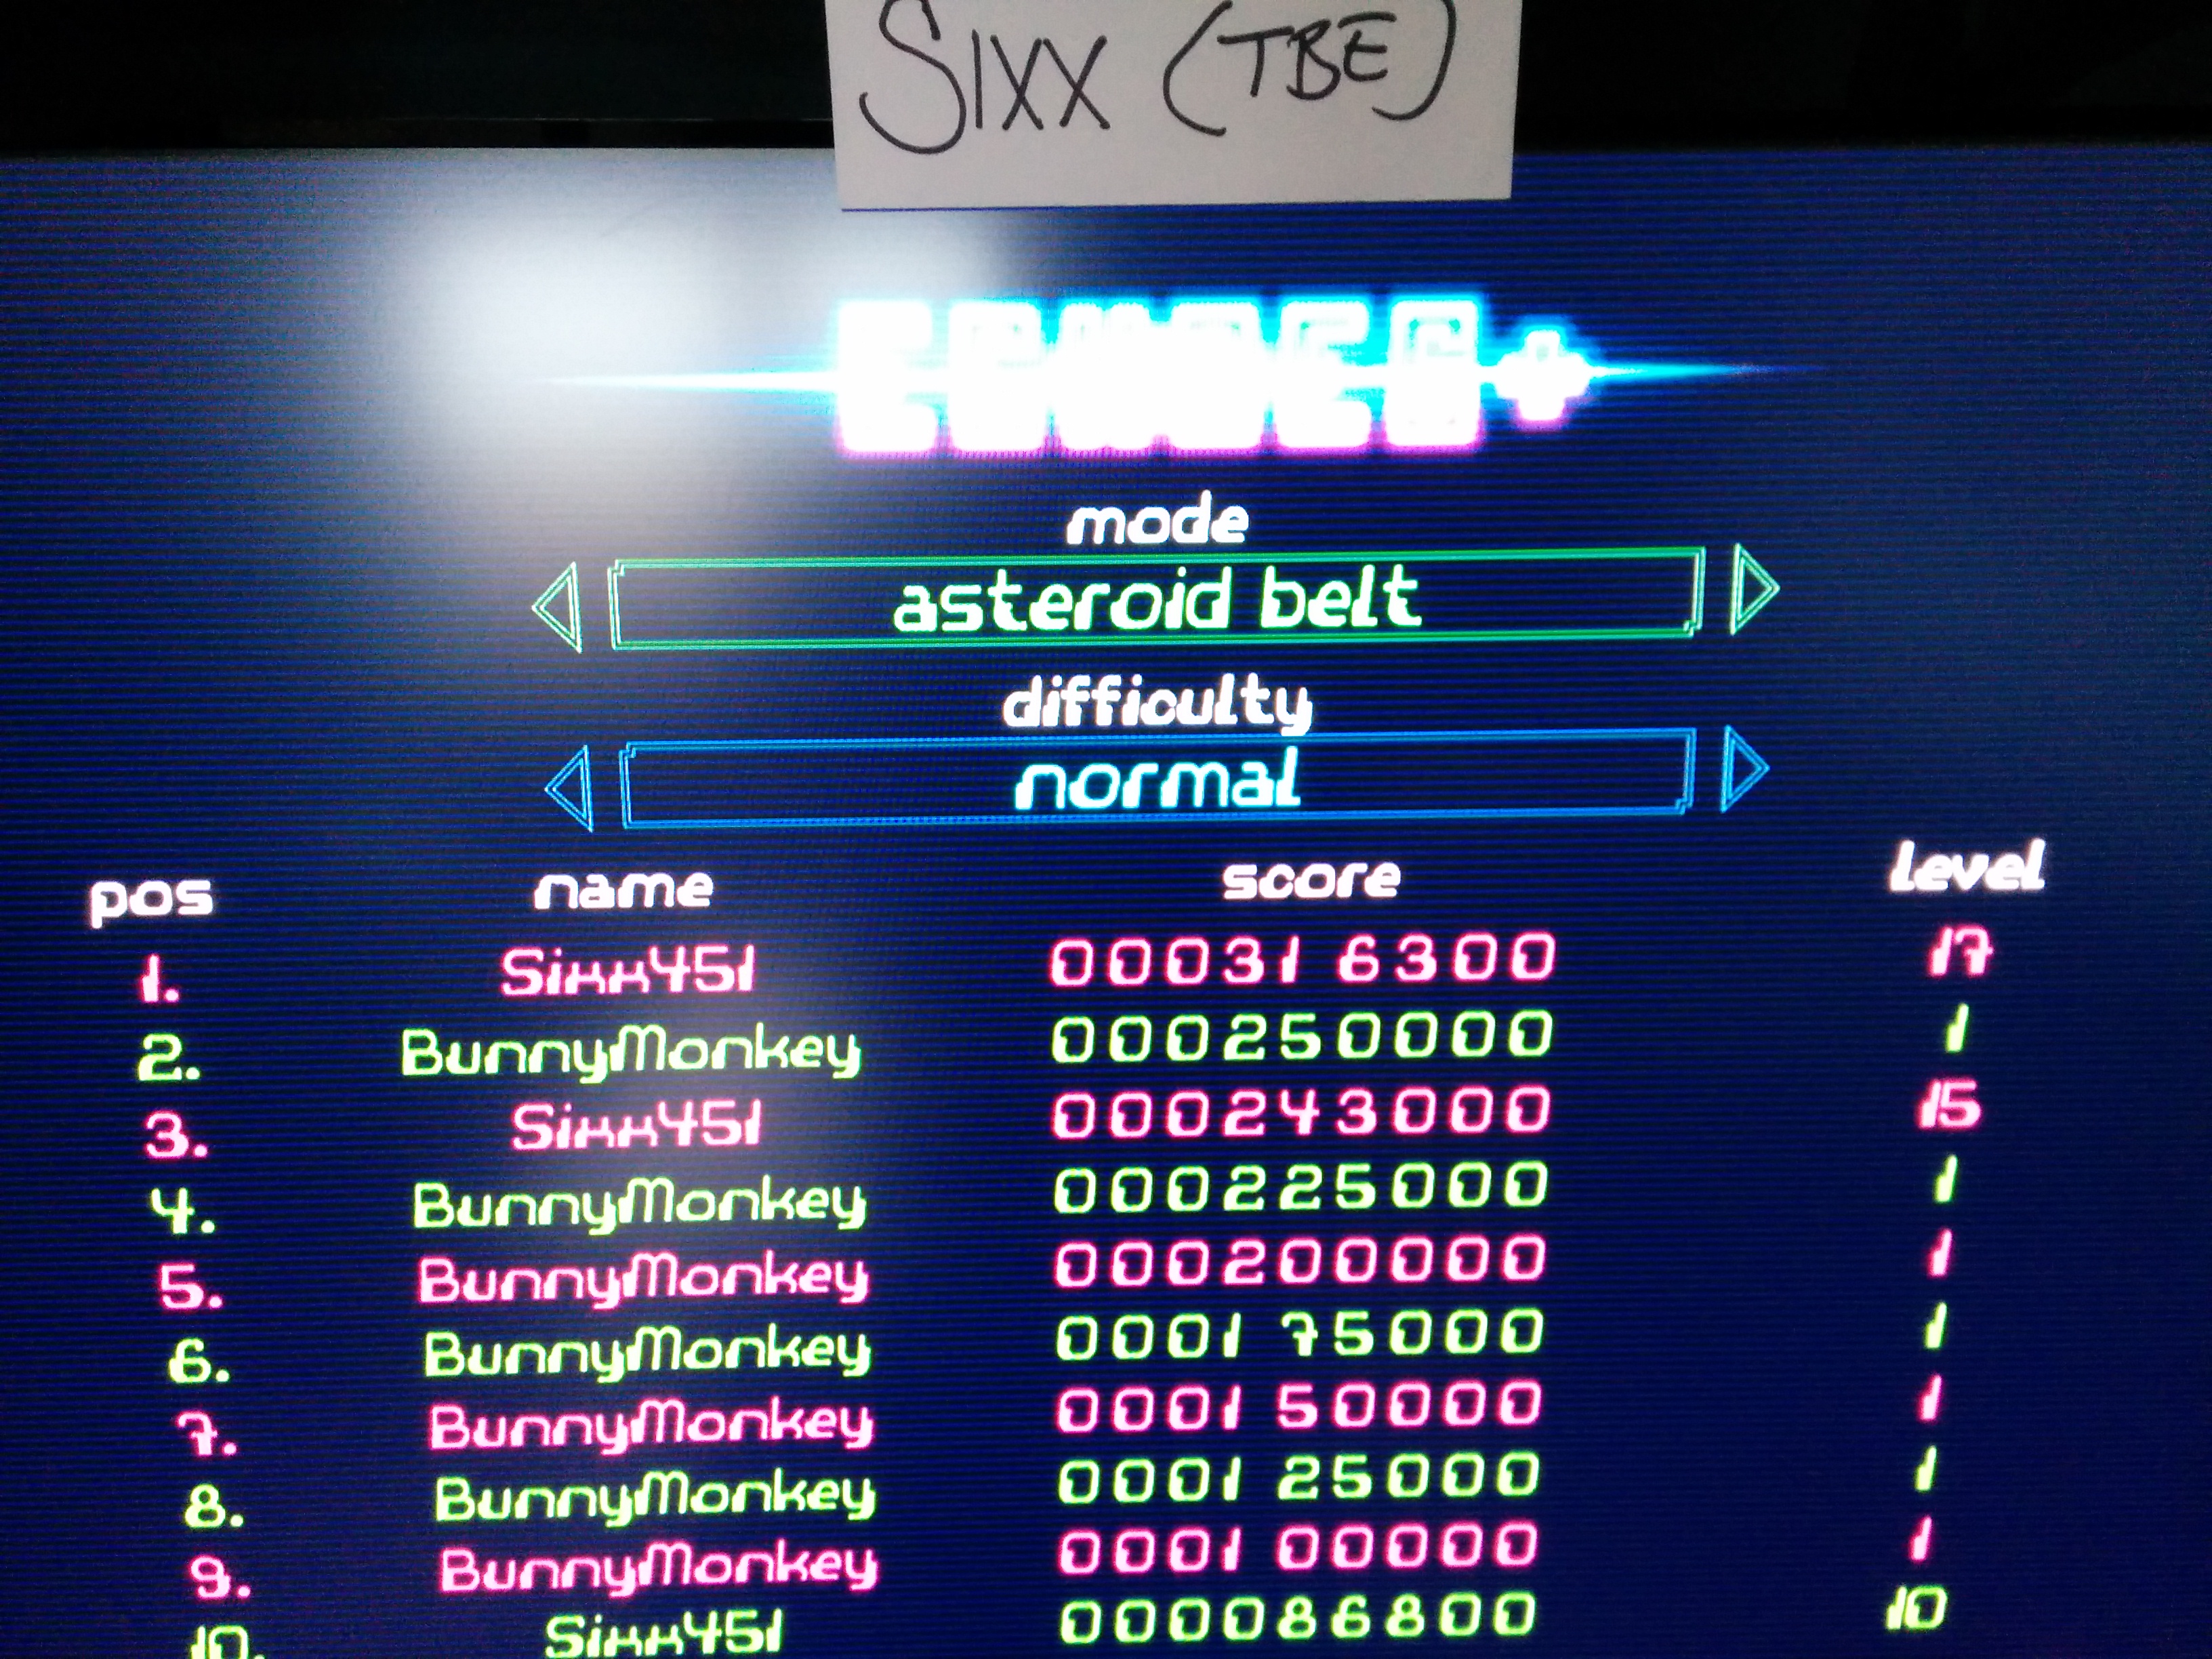 Sixx: Echoes+: Asteroid Belt (Xbox 360) 316,300 points on 2014-04-19 07:47:48